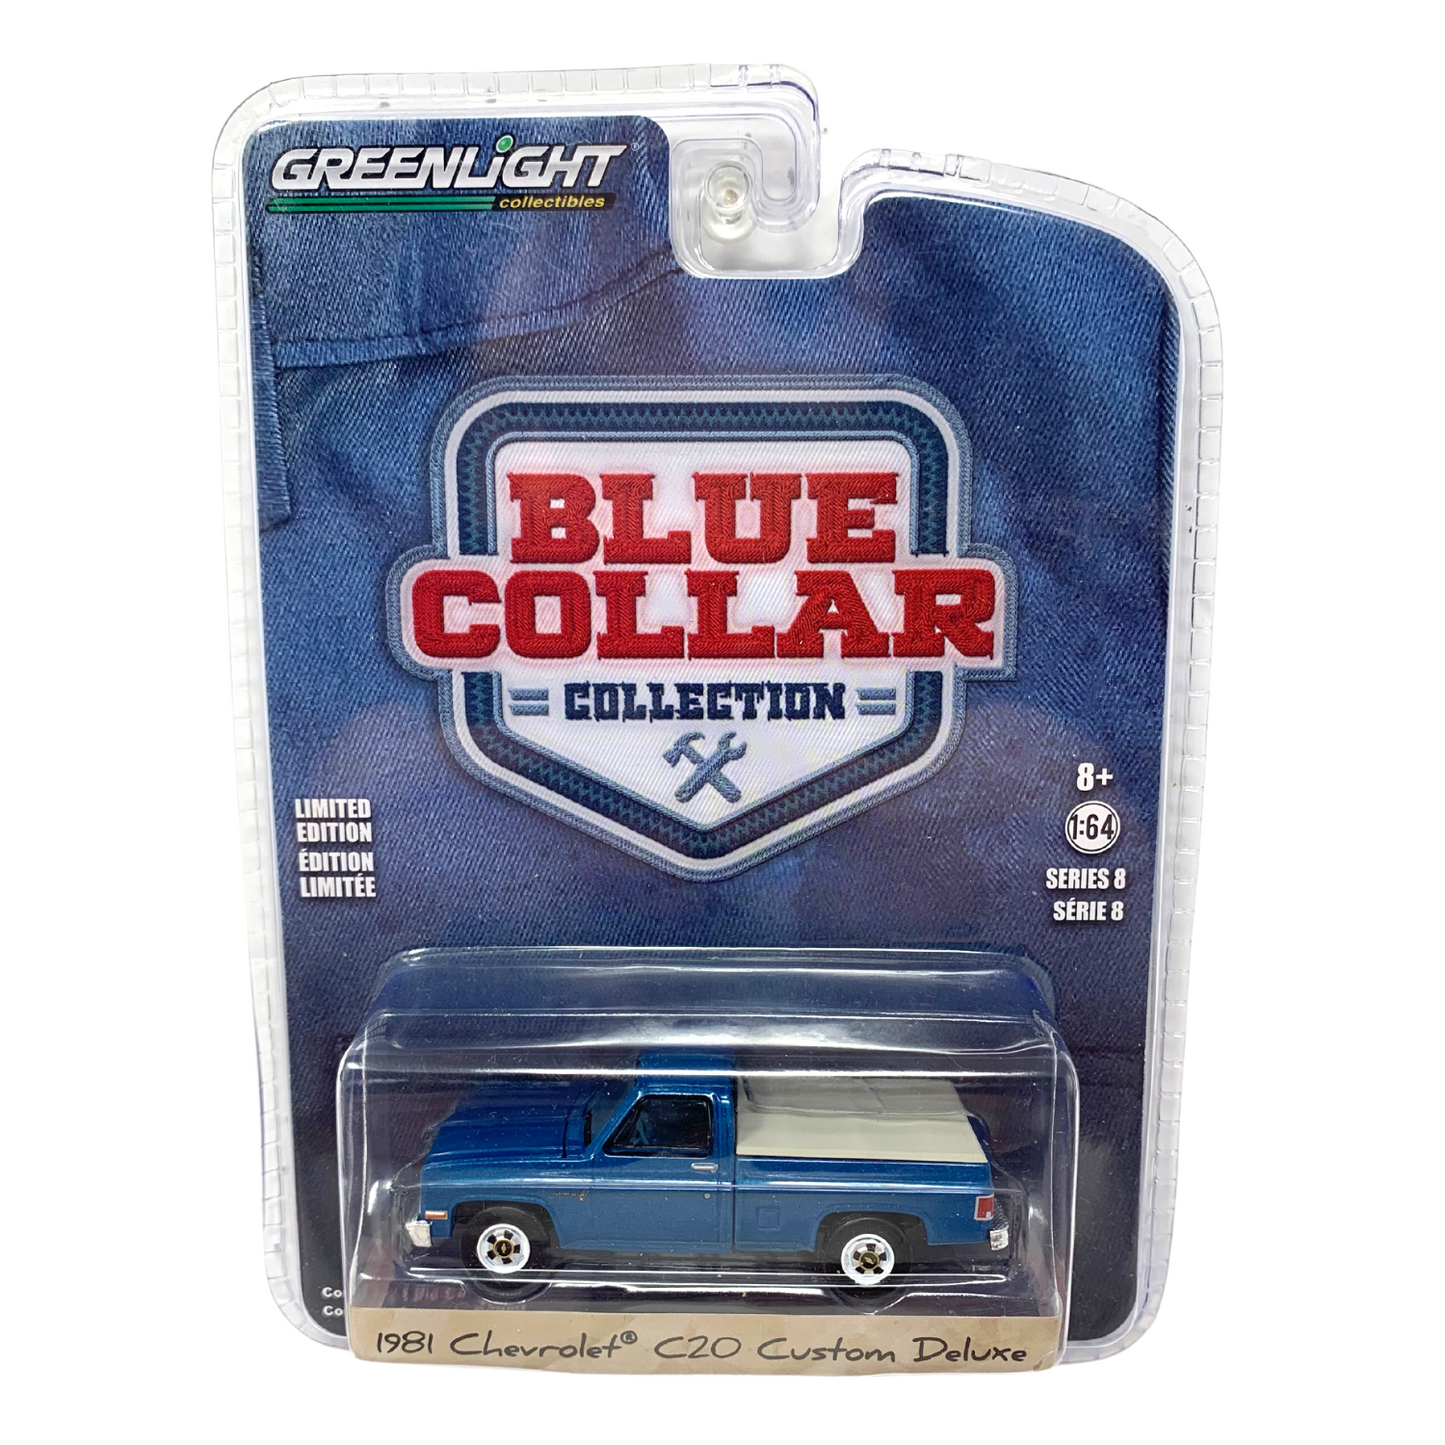 Greenlight Blue Collar Collection 1981 Chevrolet C20 Custom Deluxe 1:64 Diecast